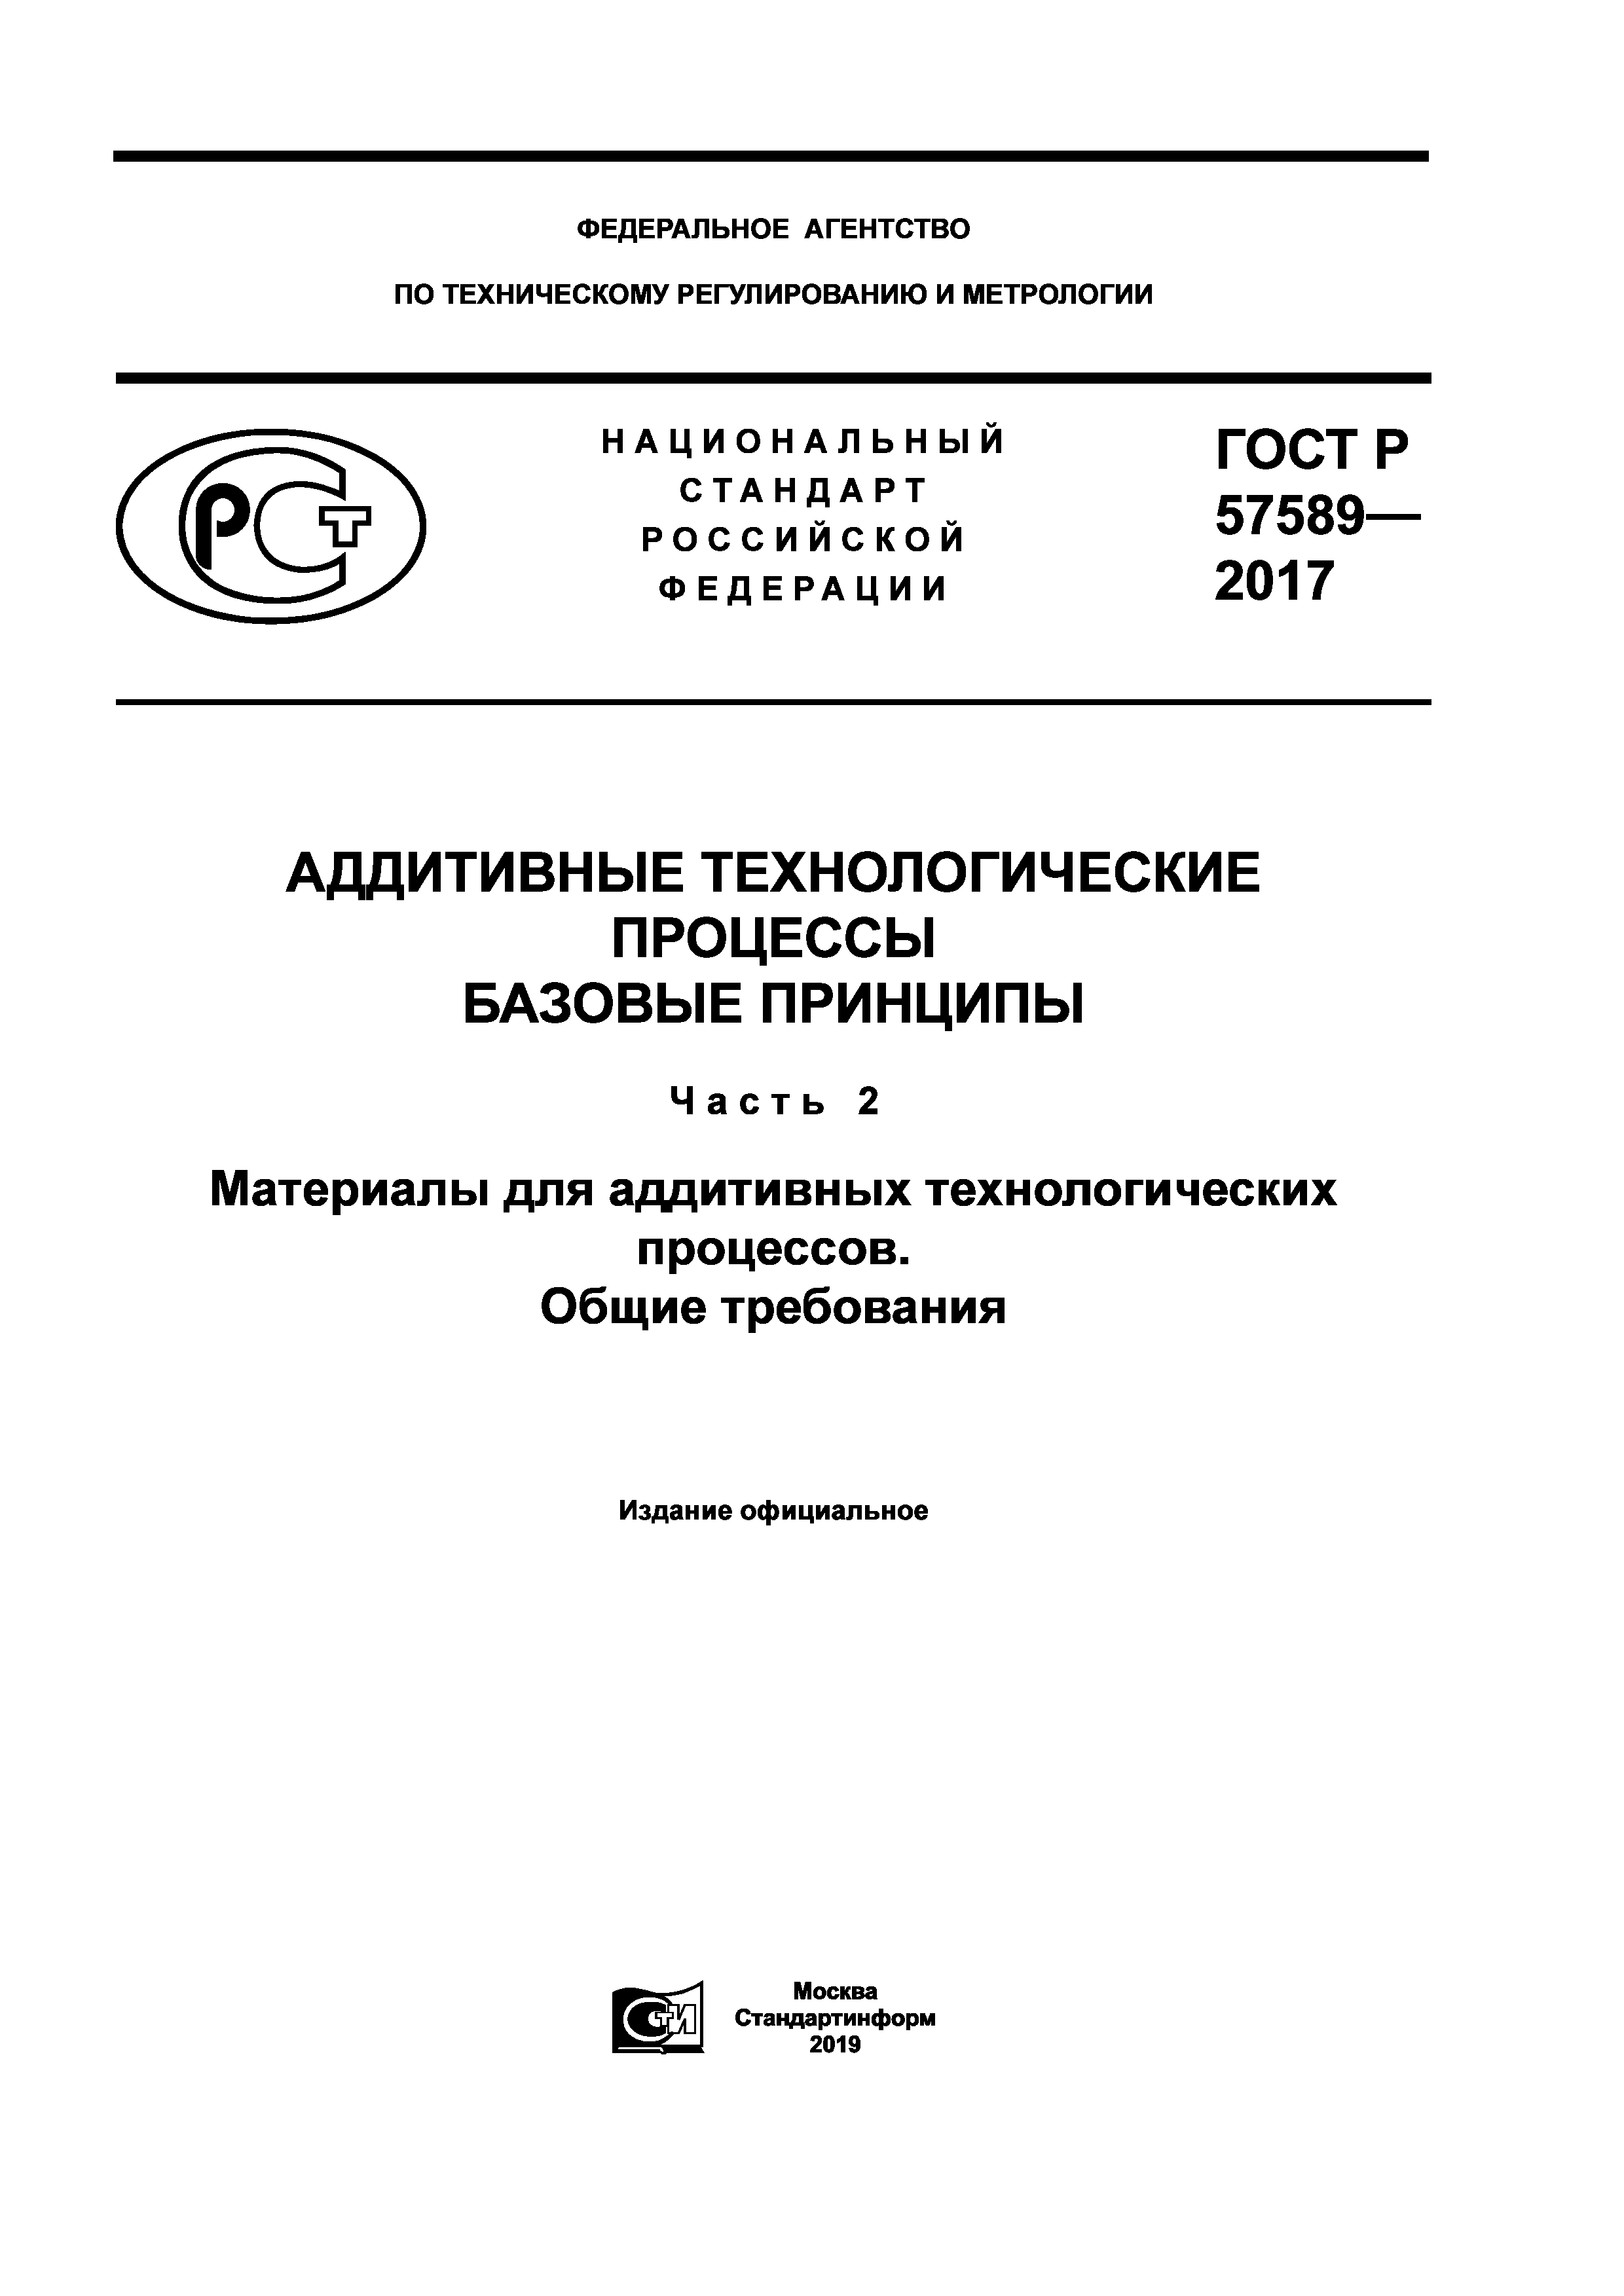 ГОСТ Р 57589-2017